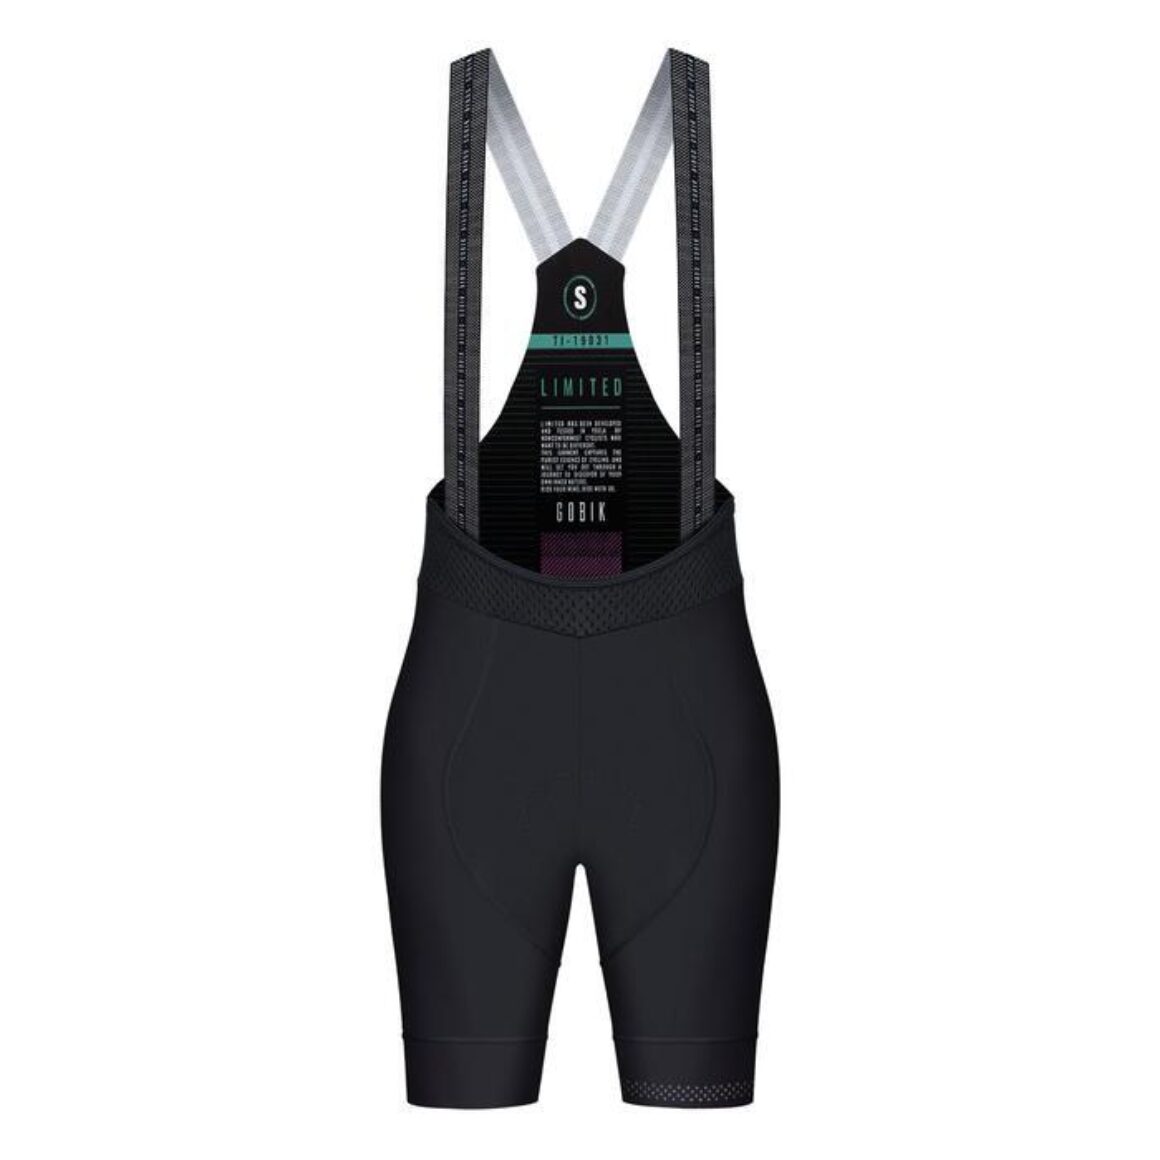 GOBIK Ss21 Women's Bib Shorts Limited Black 4.1 K9 - Xs